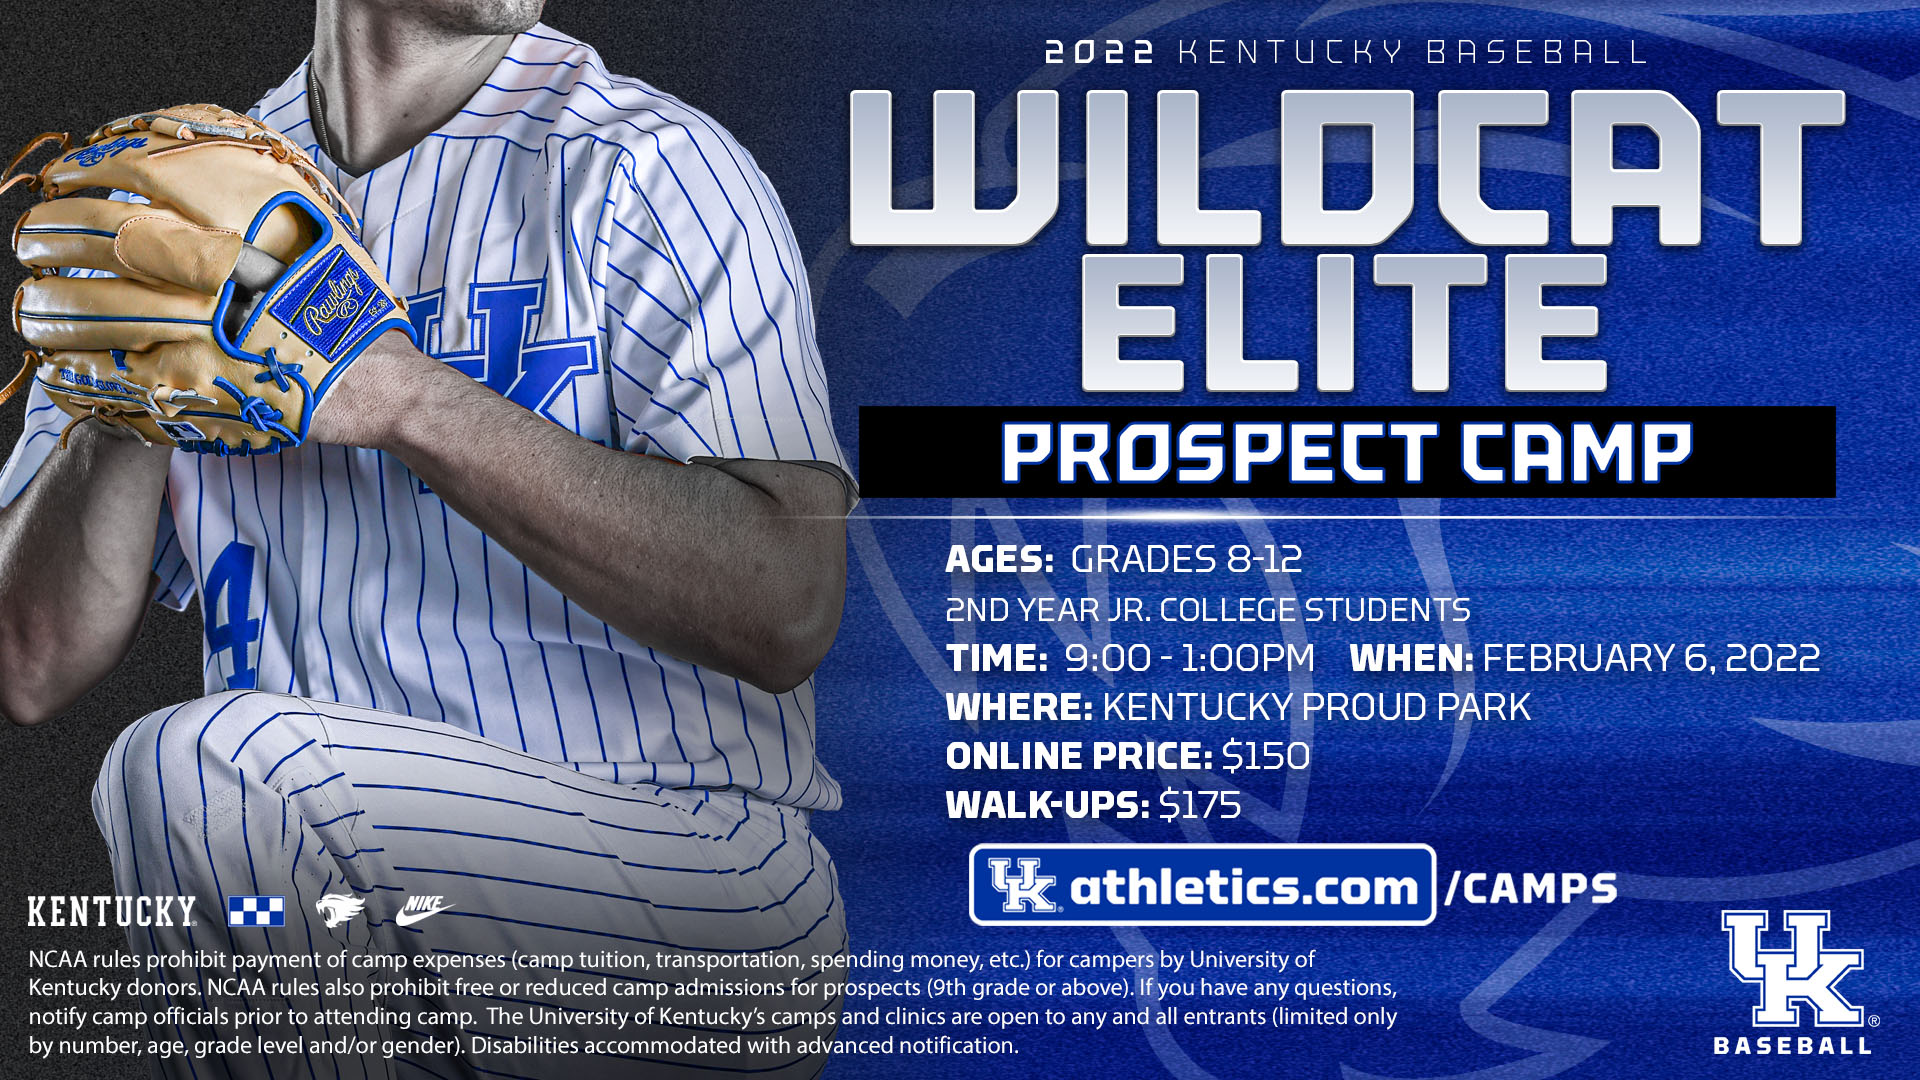 Wildcat Elite Baseball Prospect Camp